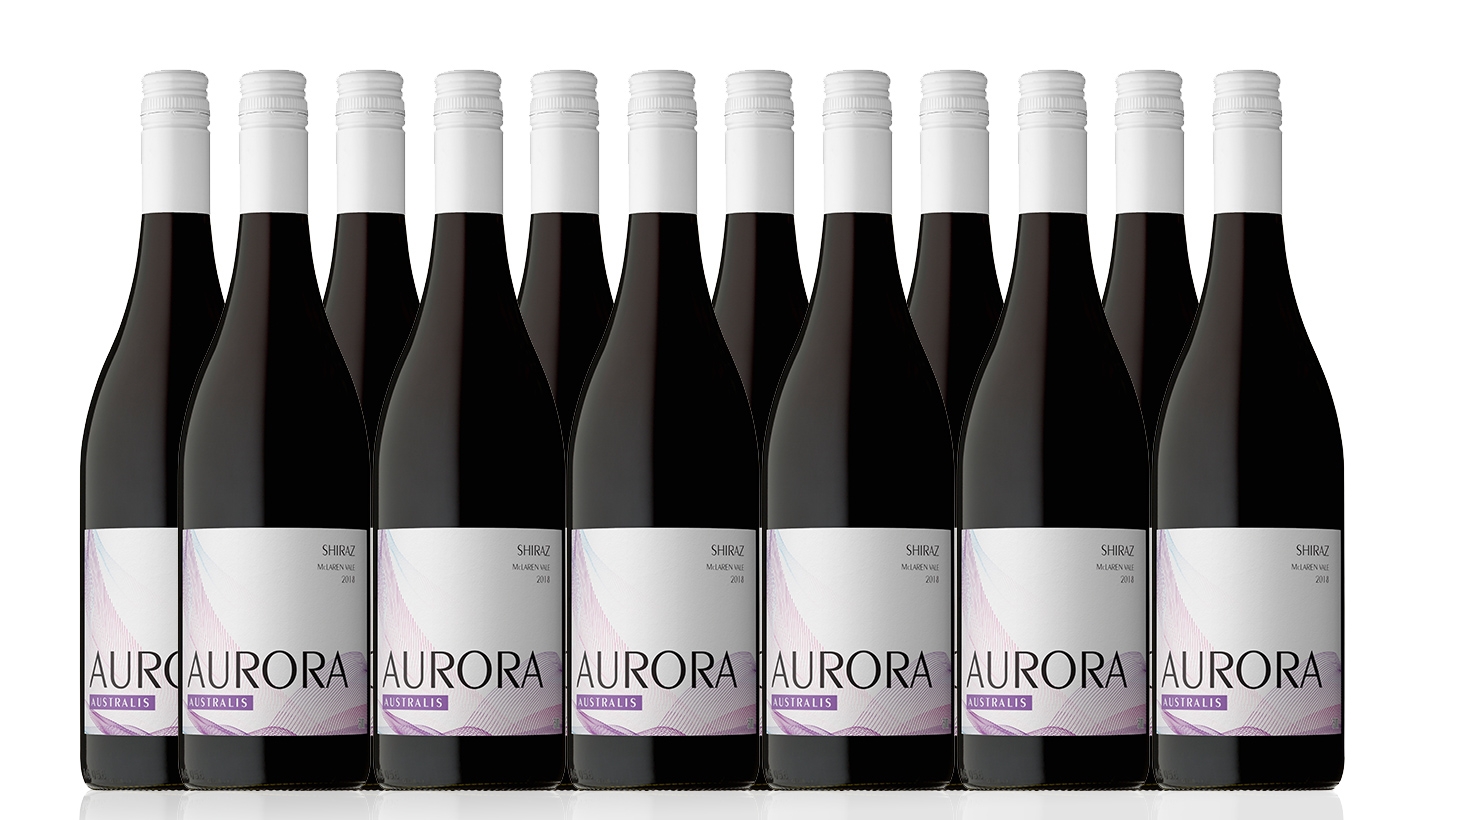 12 Bottles of Aurora 2018 Shiraz from Mystery Wines Cudo